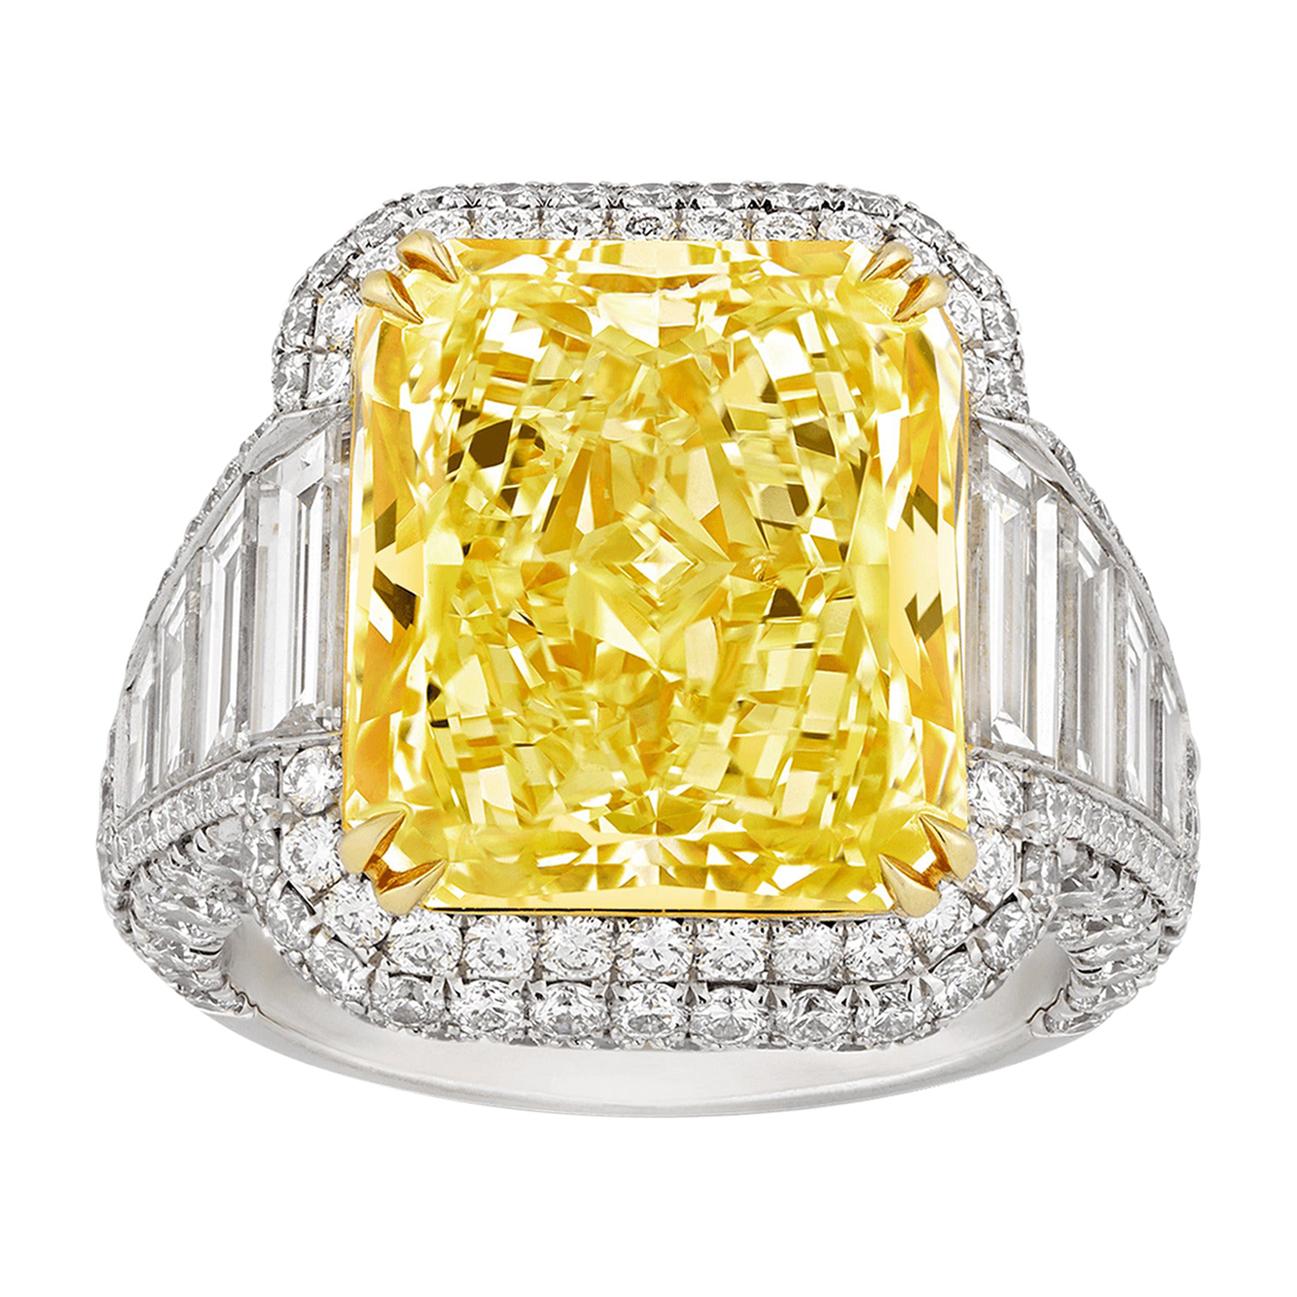 Fancy Yellow Diamond Ring, 10.02 Carat